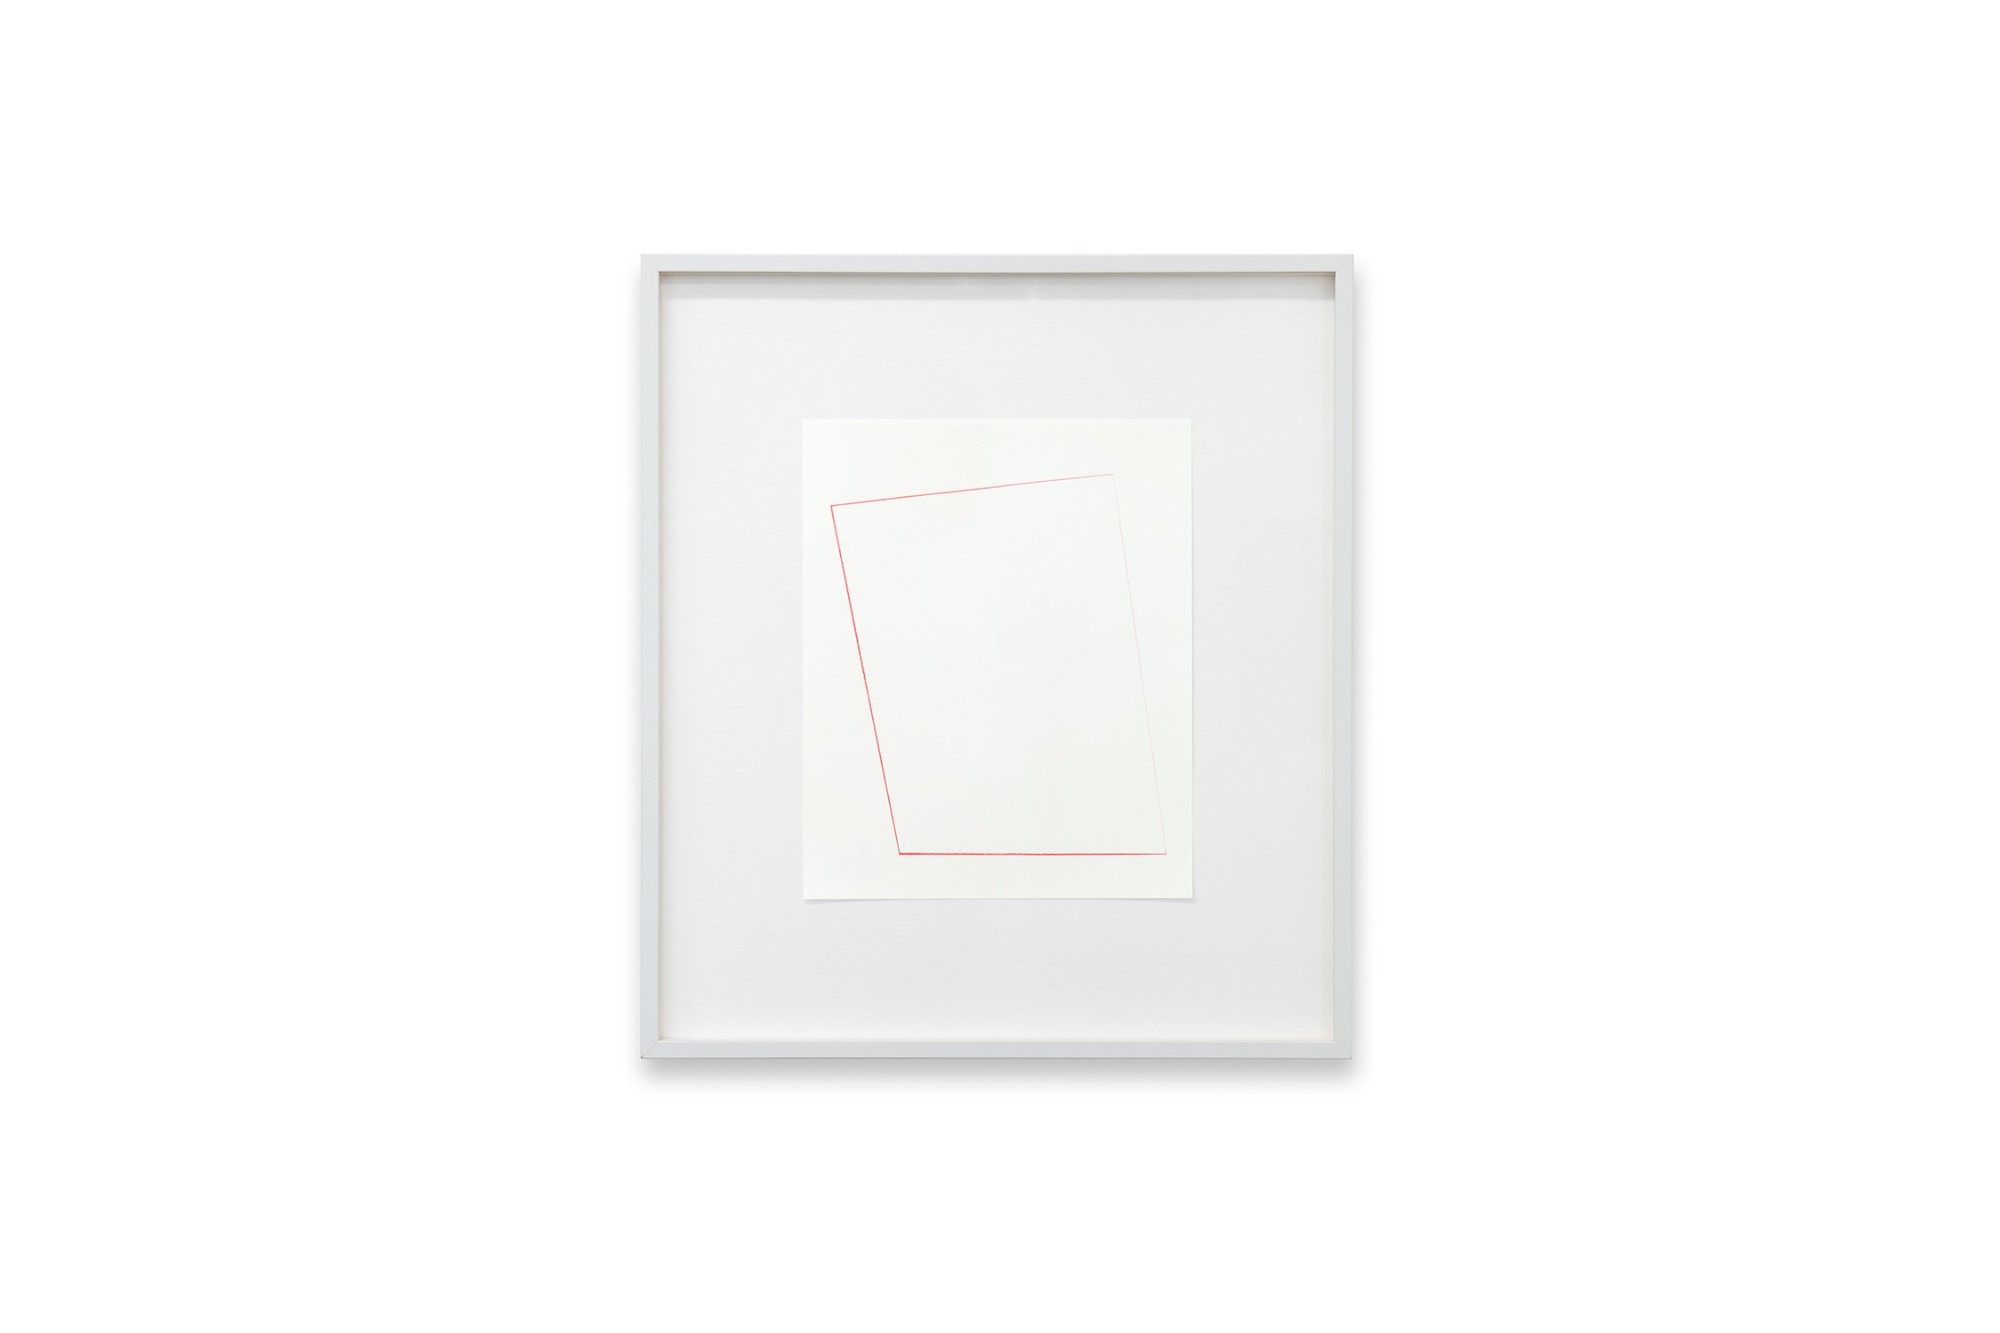 Madeleine Boschan, untitled, 2020, colour pencil, 30 x 24 cm, framed